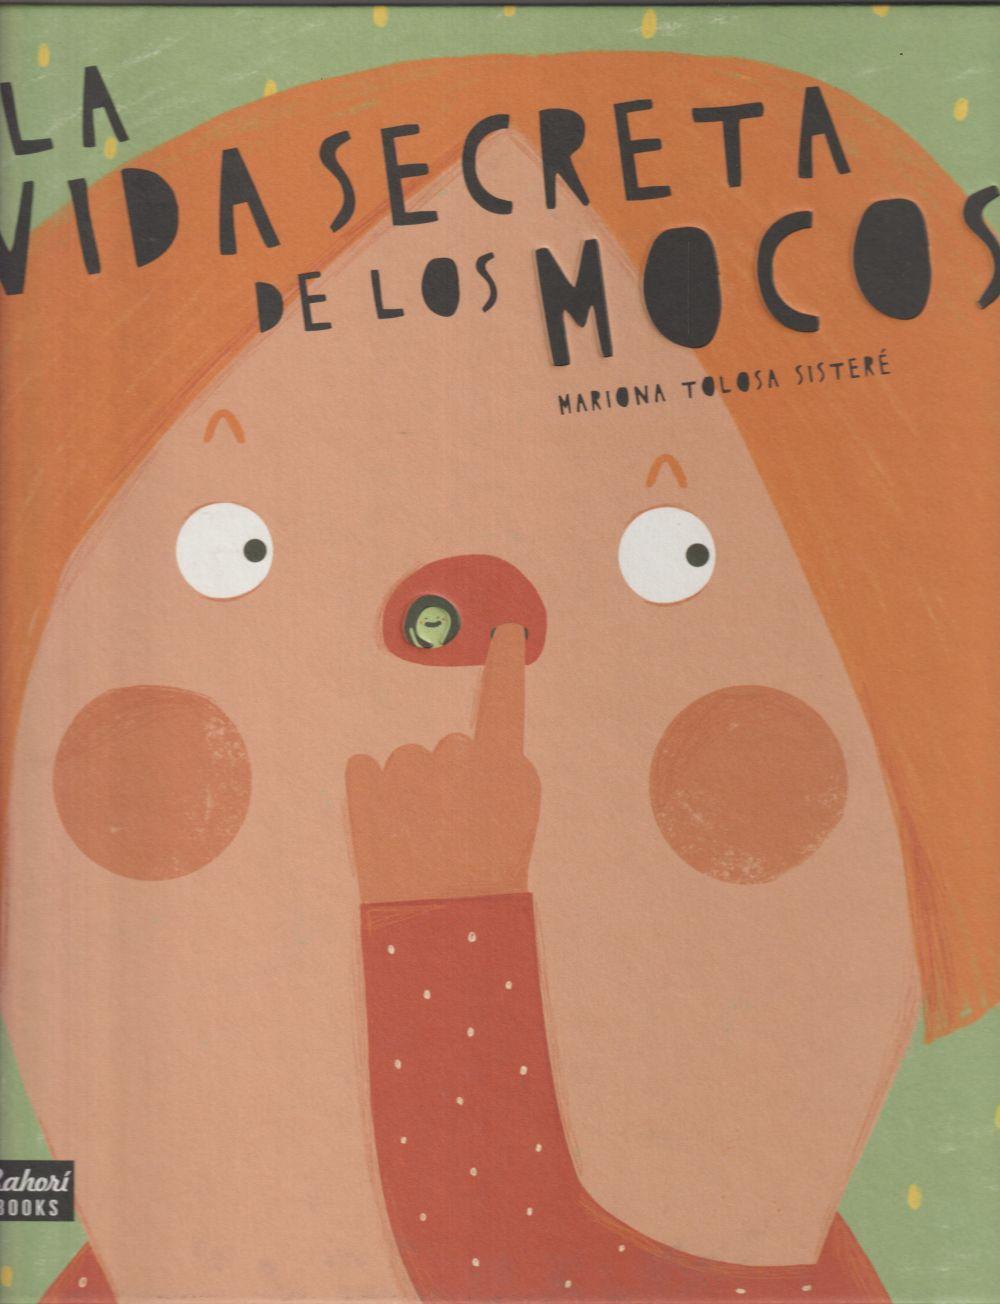 Cover: 9788417374211 | La vida secreta de los mocos | Taschenbuch | Spanisch | Zahori Books